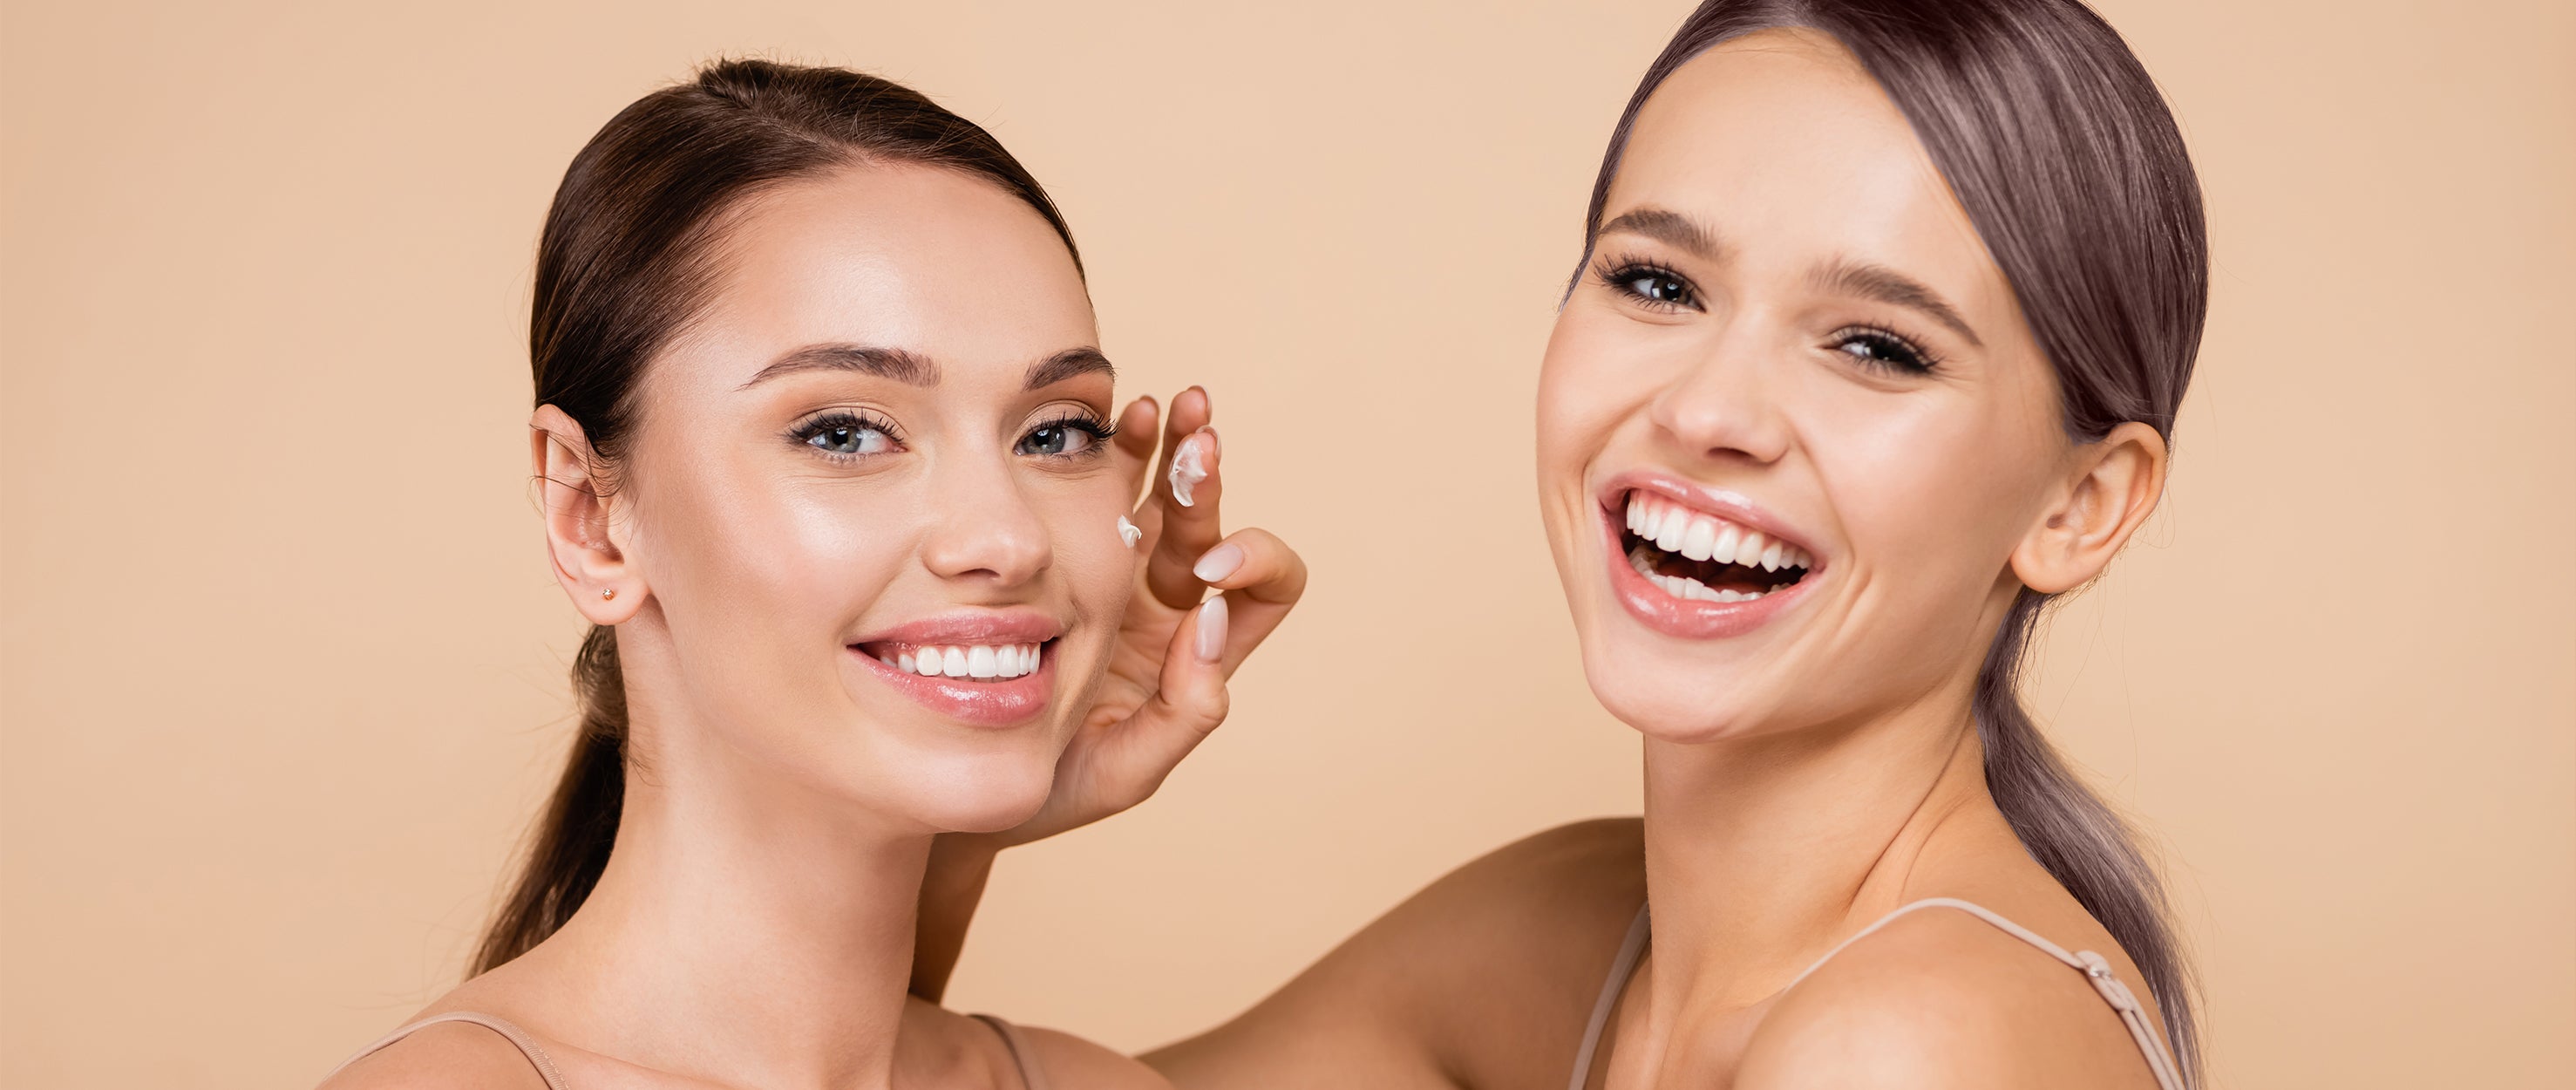 6 Reasons Why Sharing Makeup Is A Big